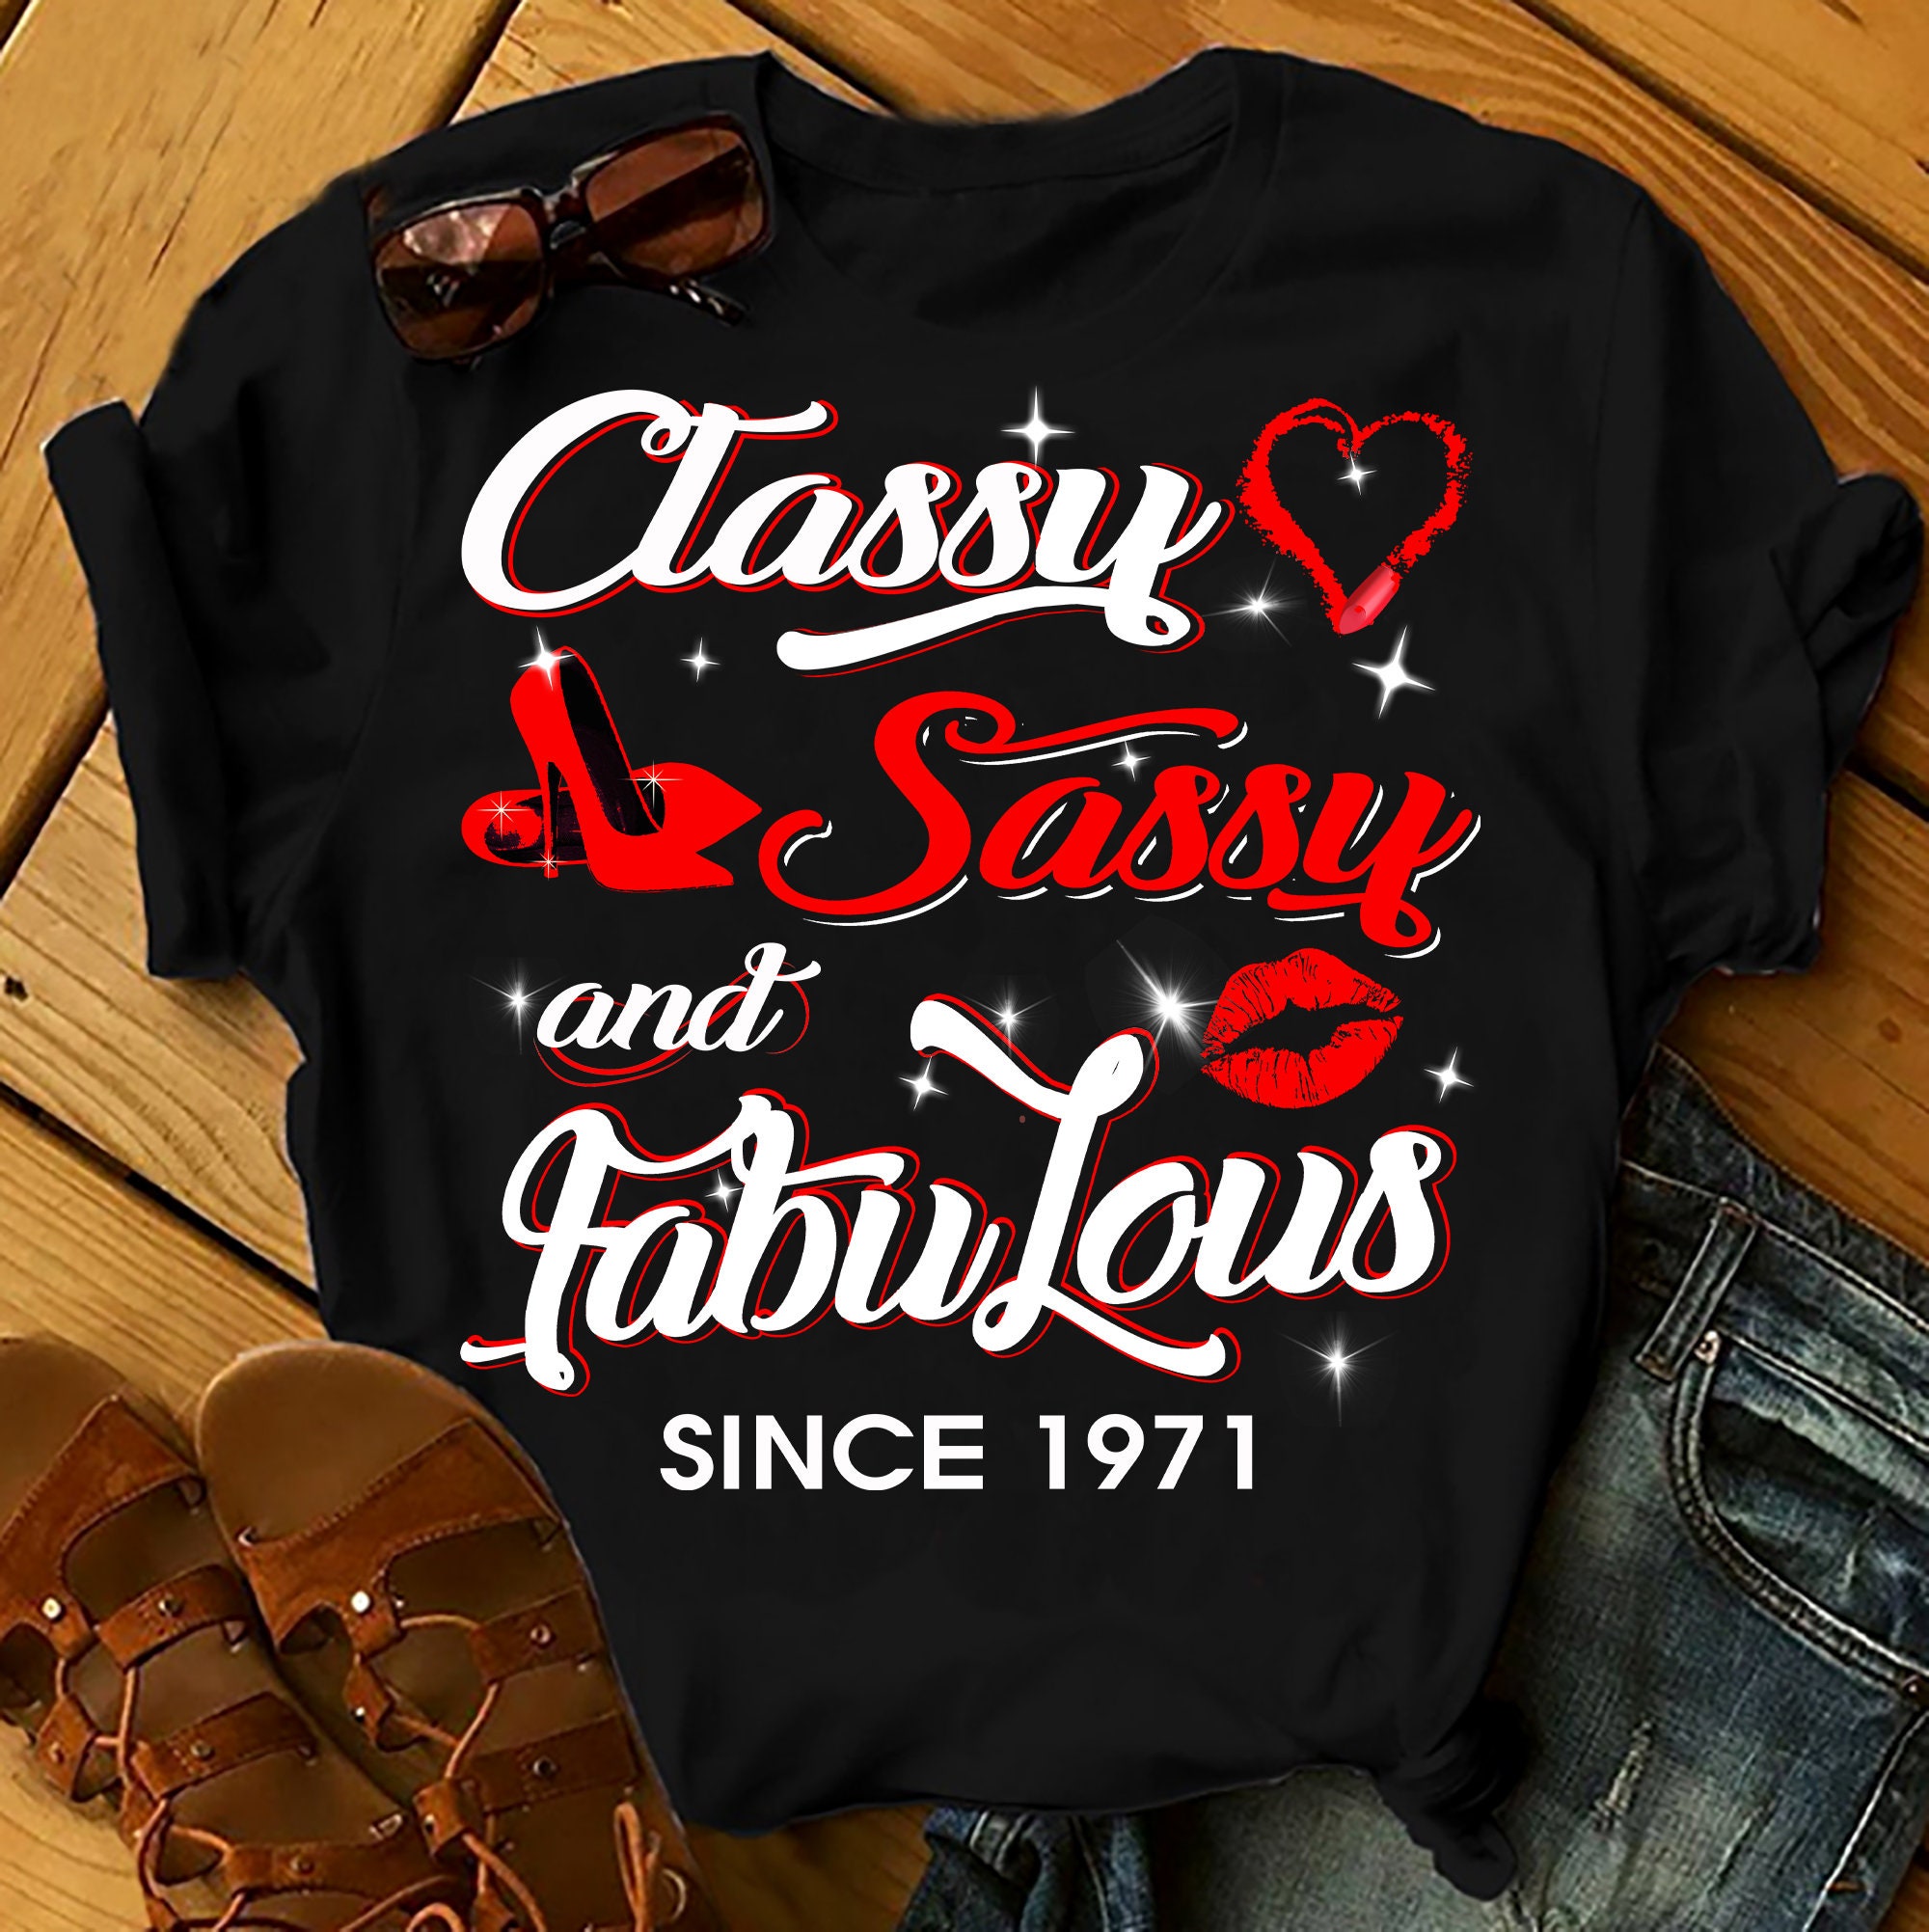 Classy Sassy And Fabulous since 1971 – Shirts Women, Birthday T Shirts, Summer Tops, Beach T Shirts